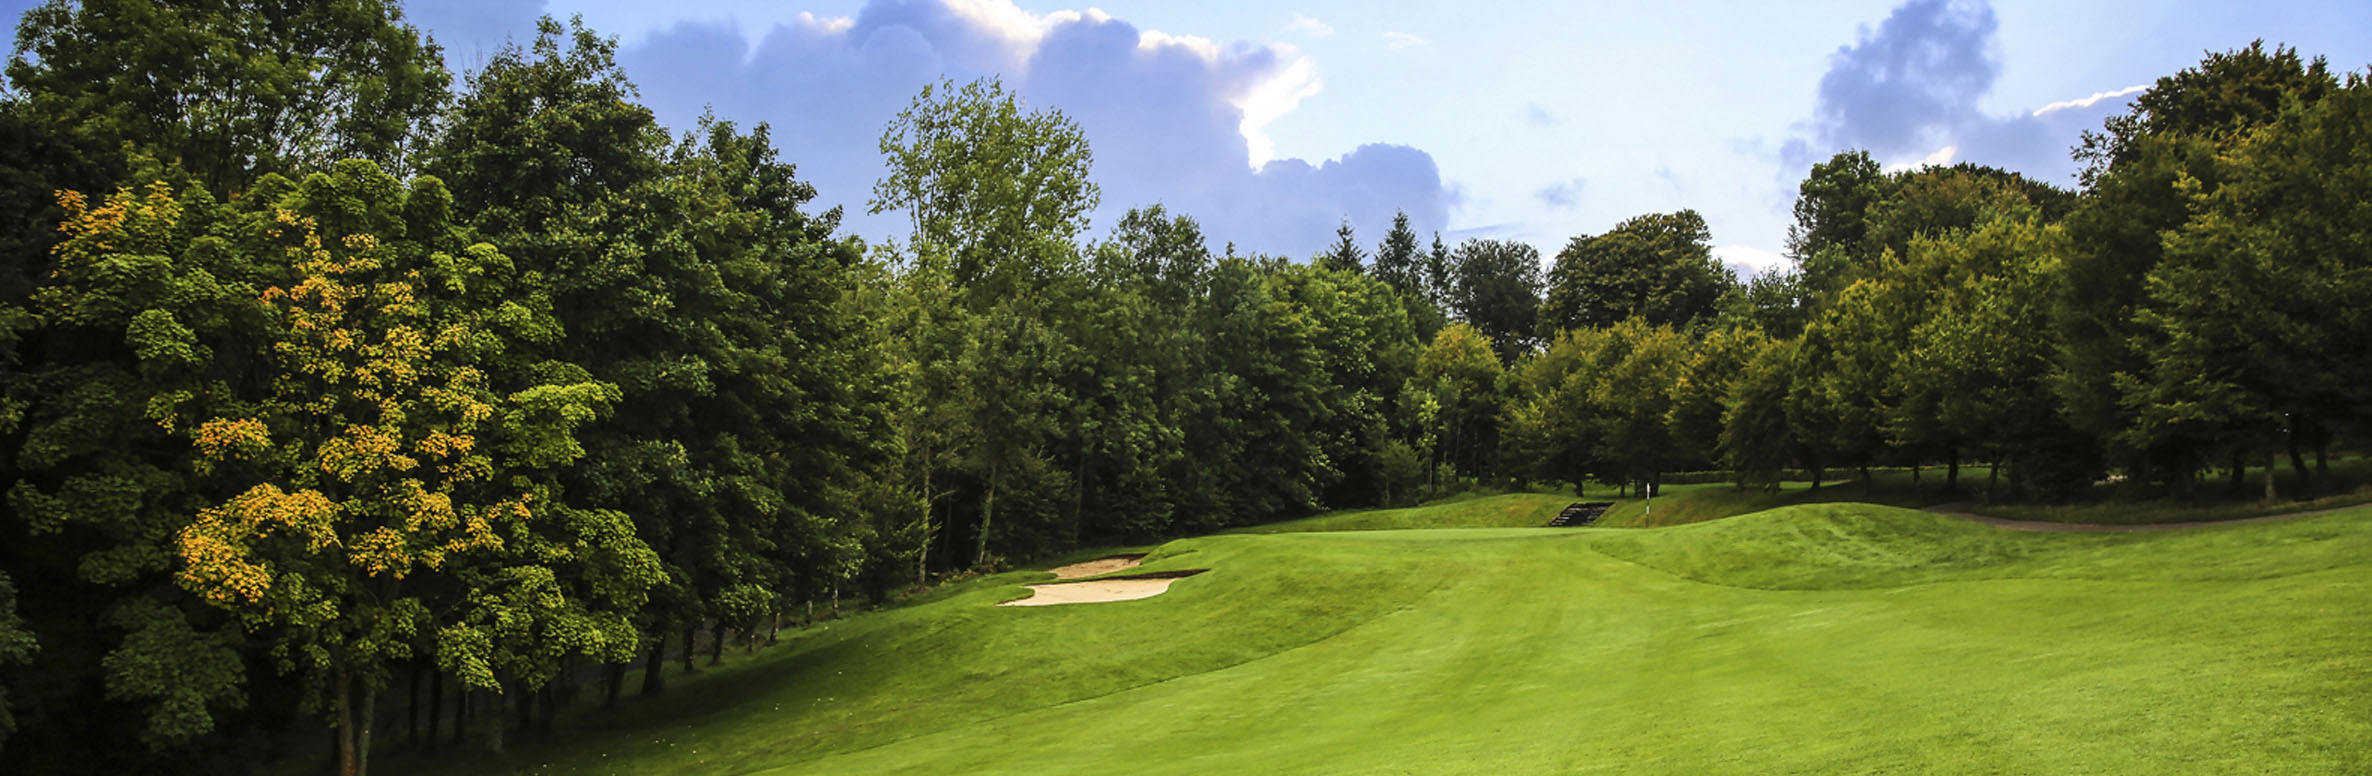 Golf Course Image - Aa Saint-Omer Golf Club No. 8